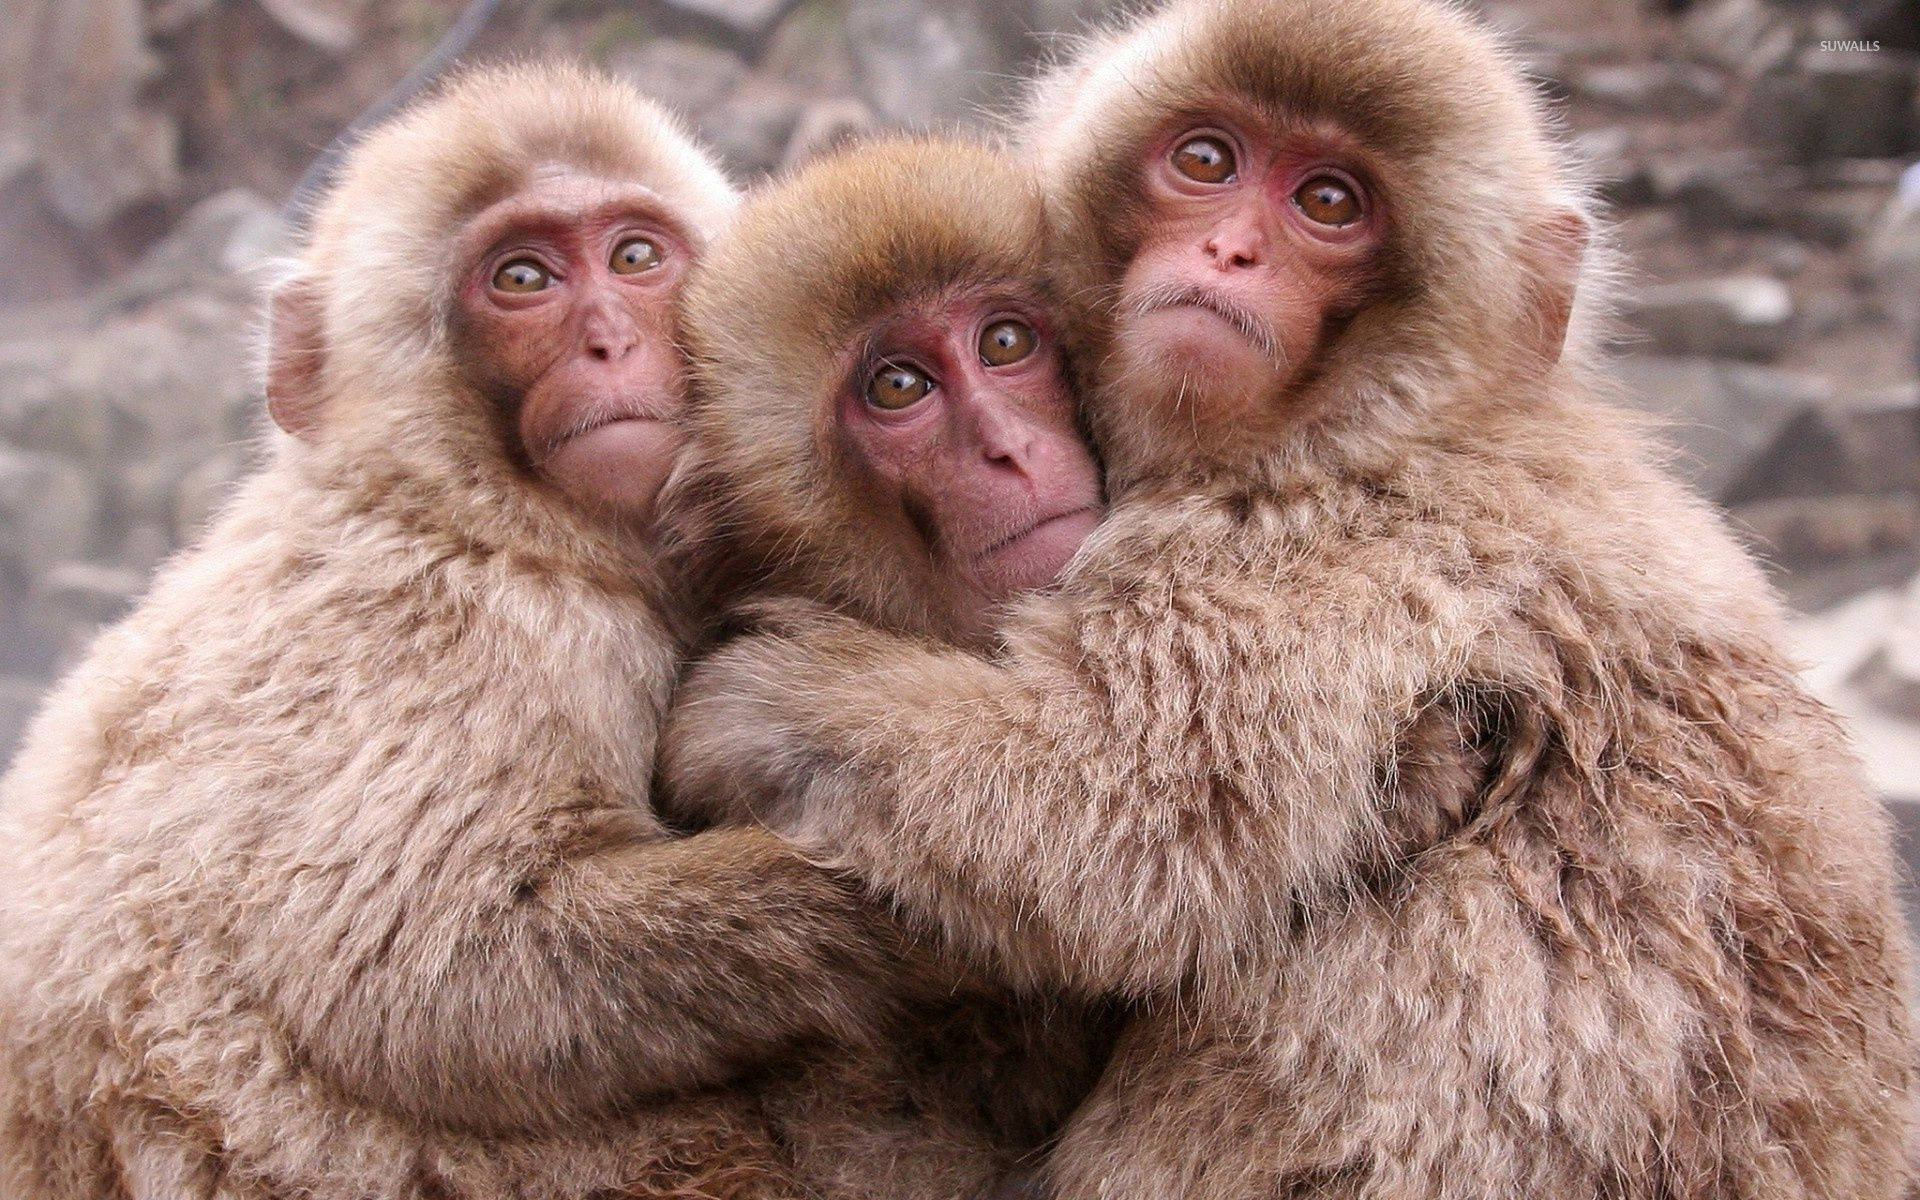 Three Adorable Monkeys Posing Together Wallpaper